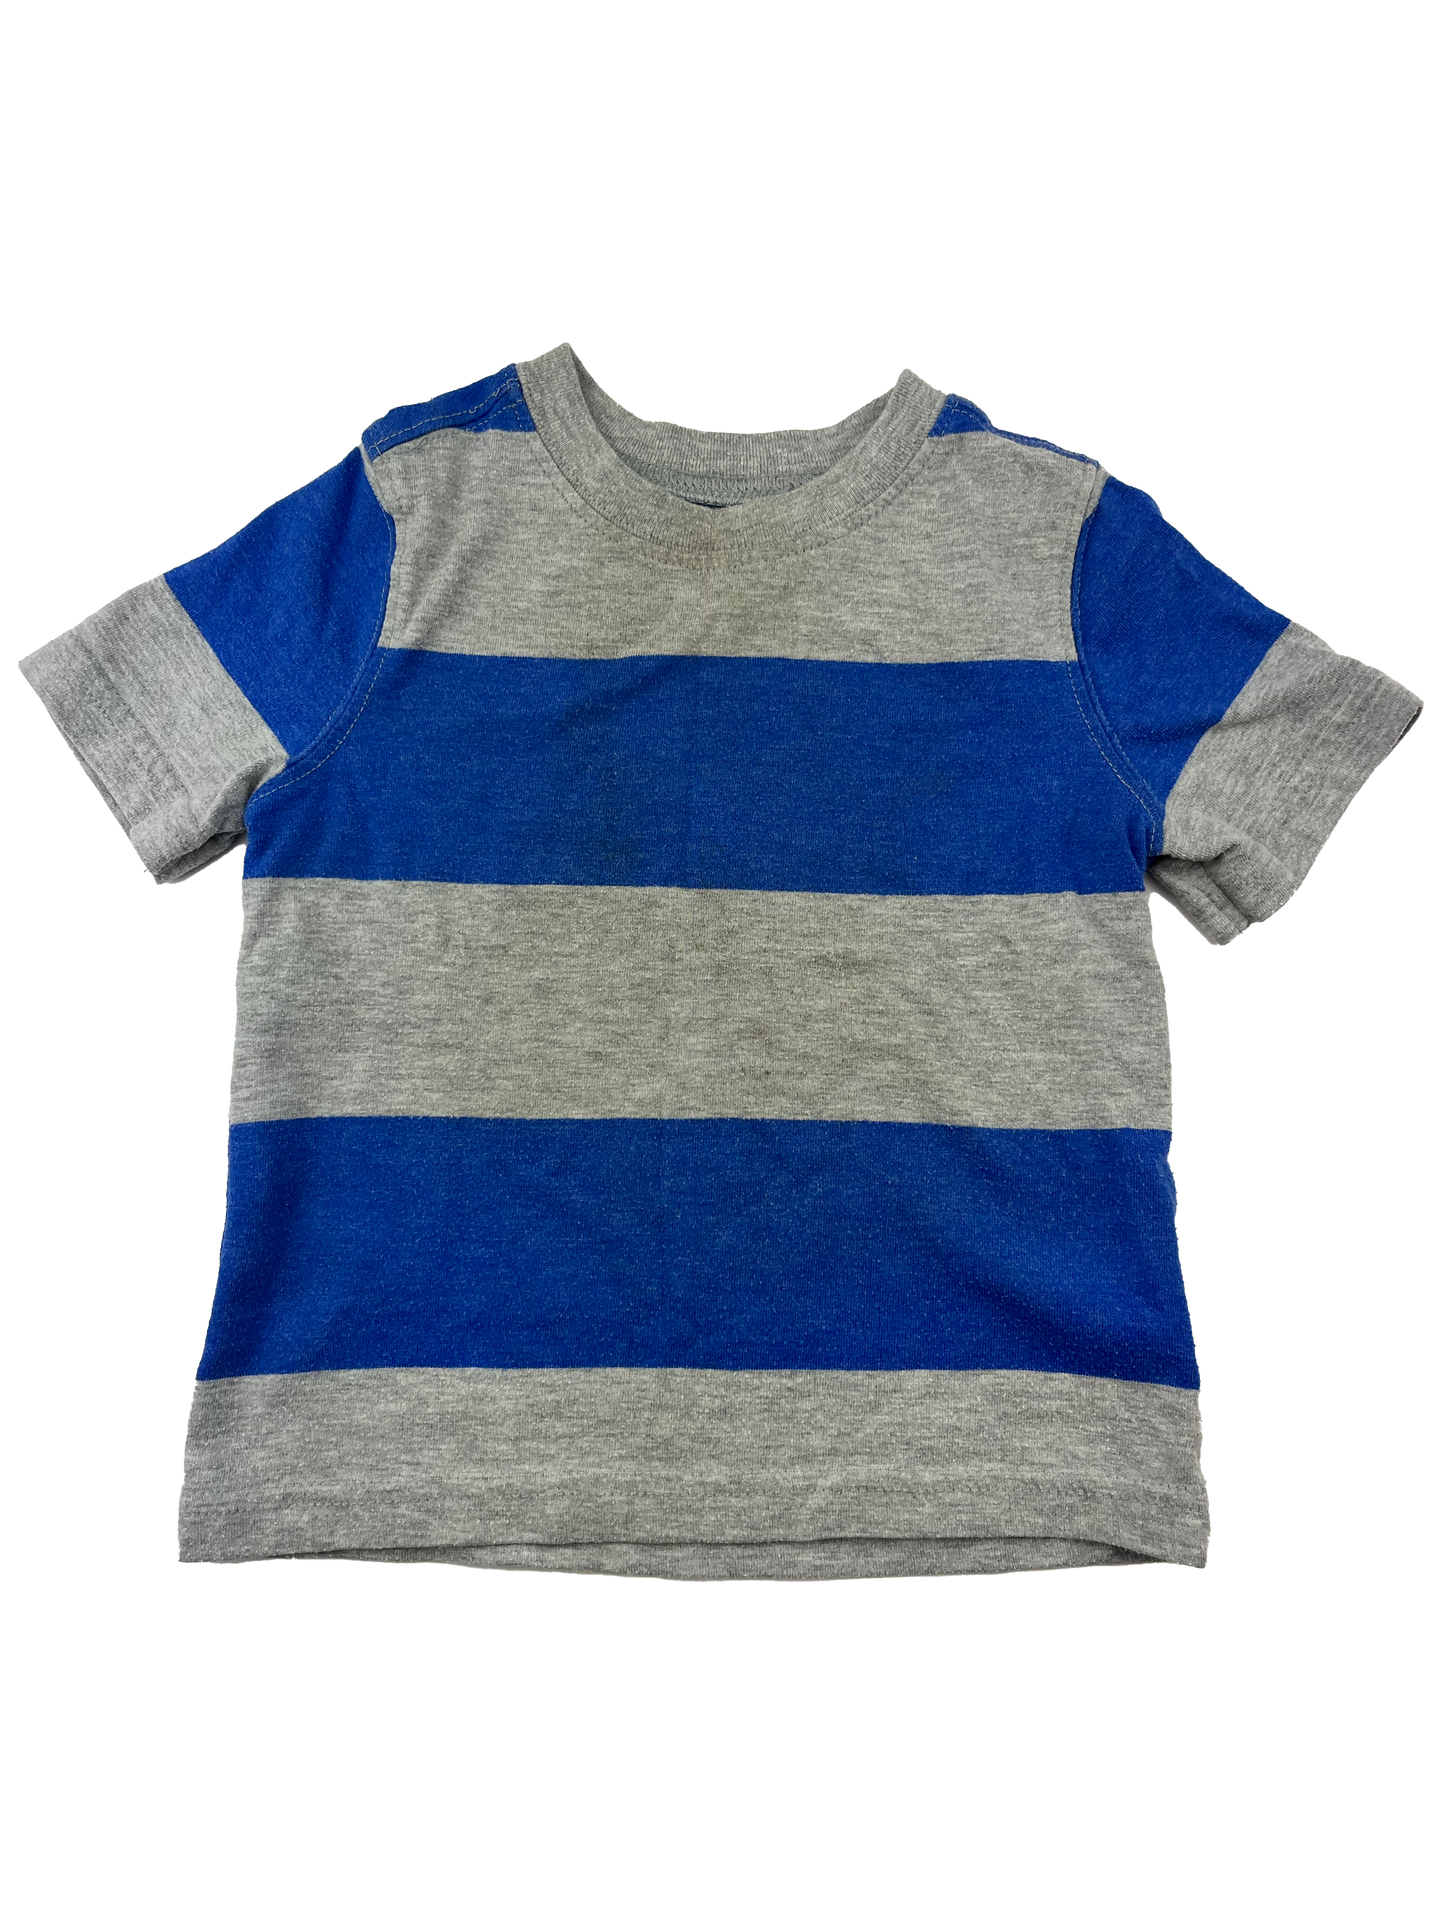 Old Navy Grey & Blue Striped T-Shirt 18-24M